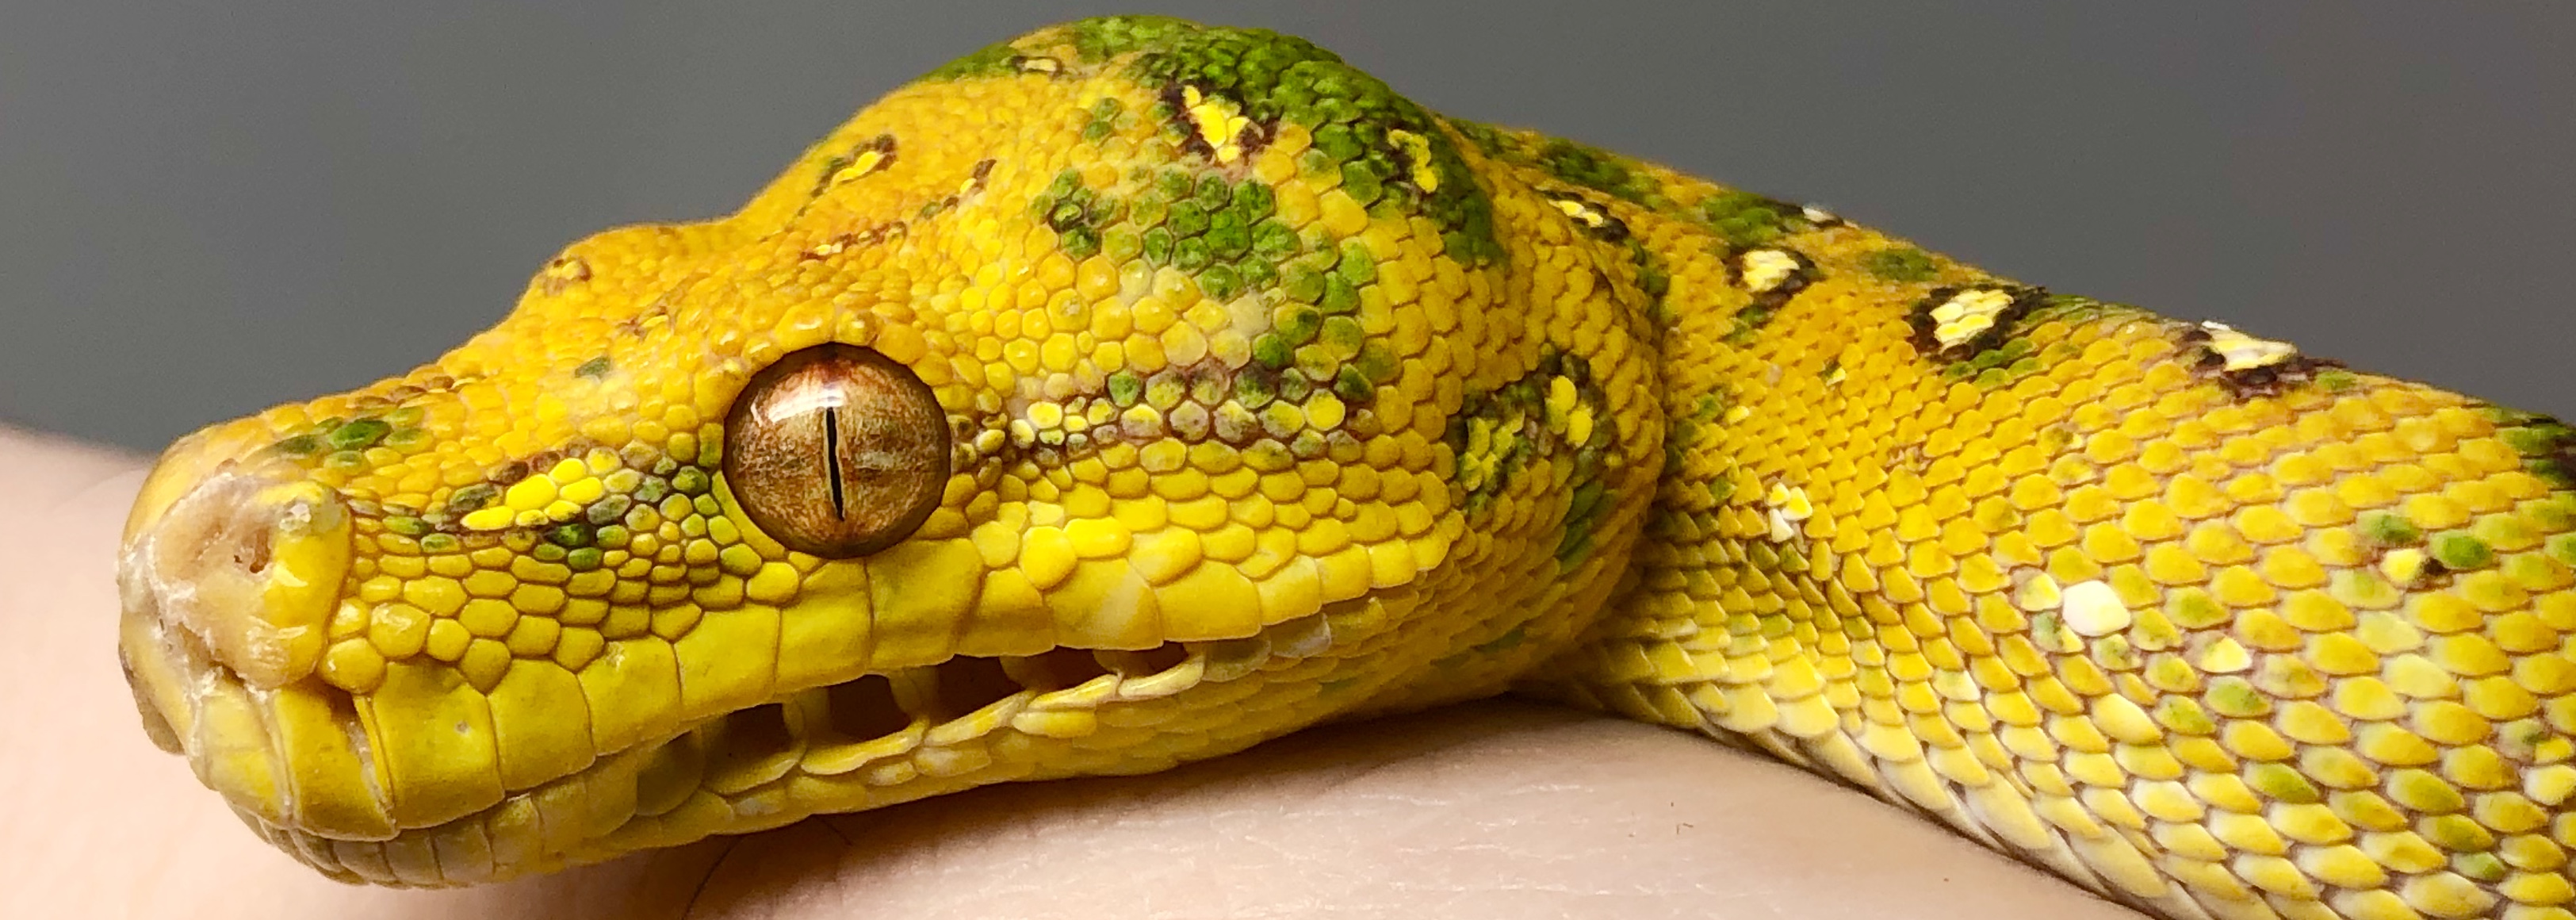 Biak Green Tree Python by Good Guy Reptile Family